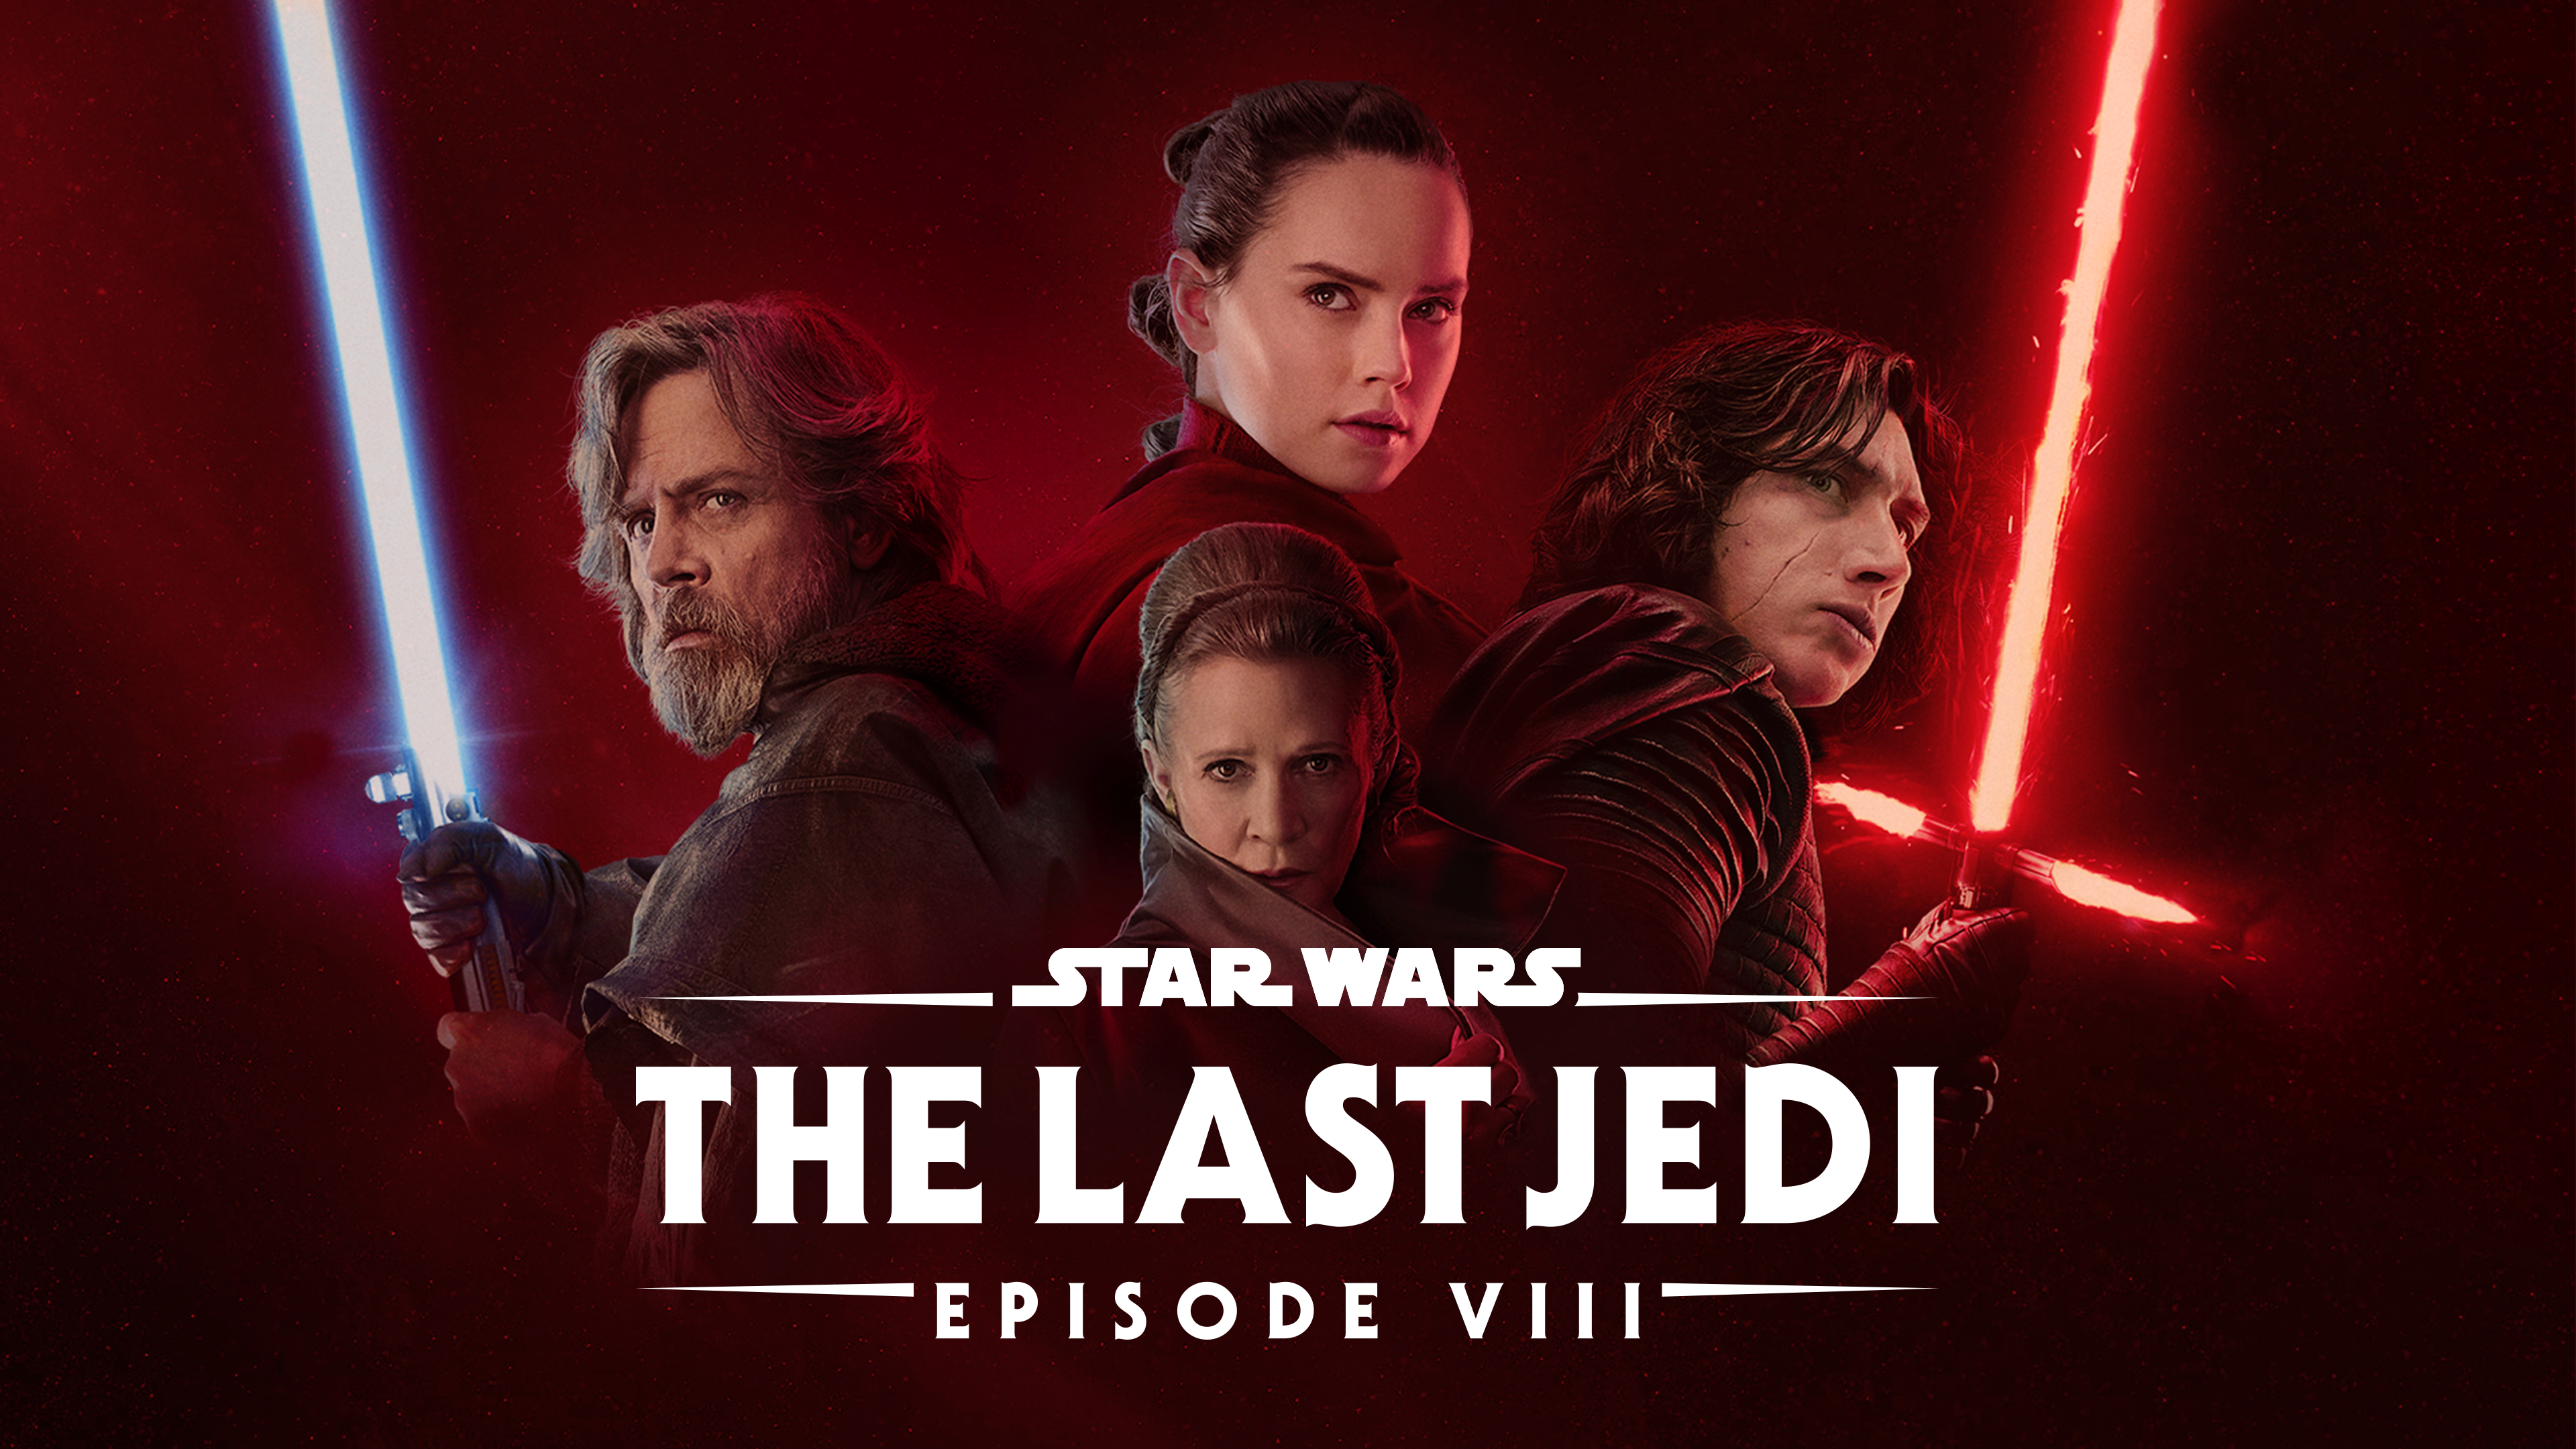 Watch Star Wars The Last Jedi Episode Viii Full Movie Disney